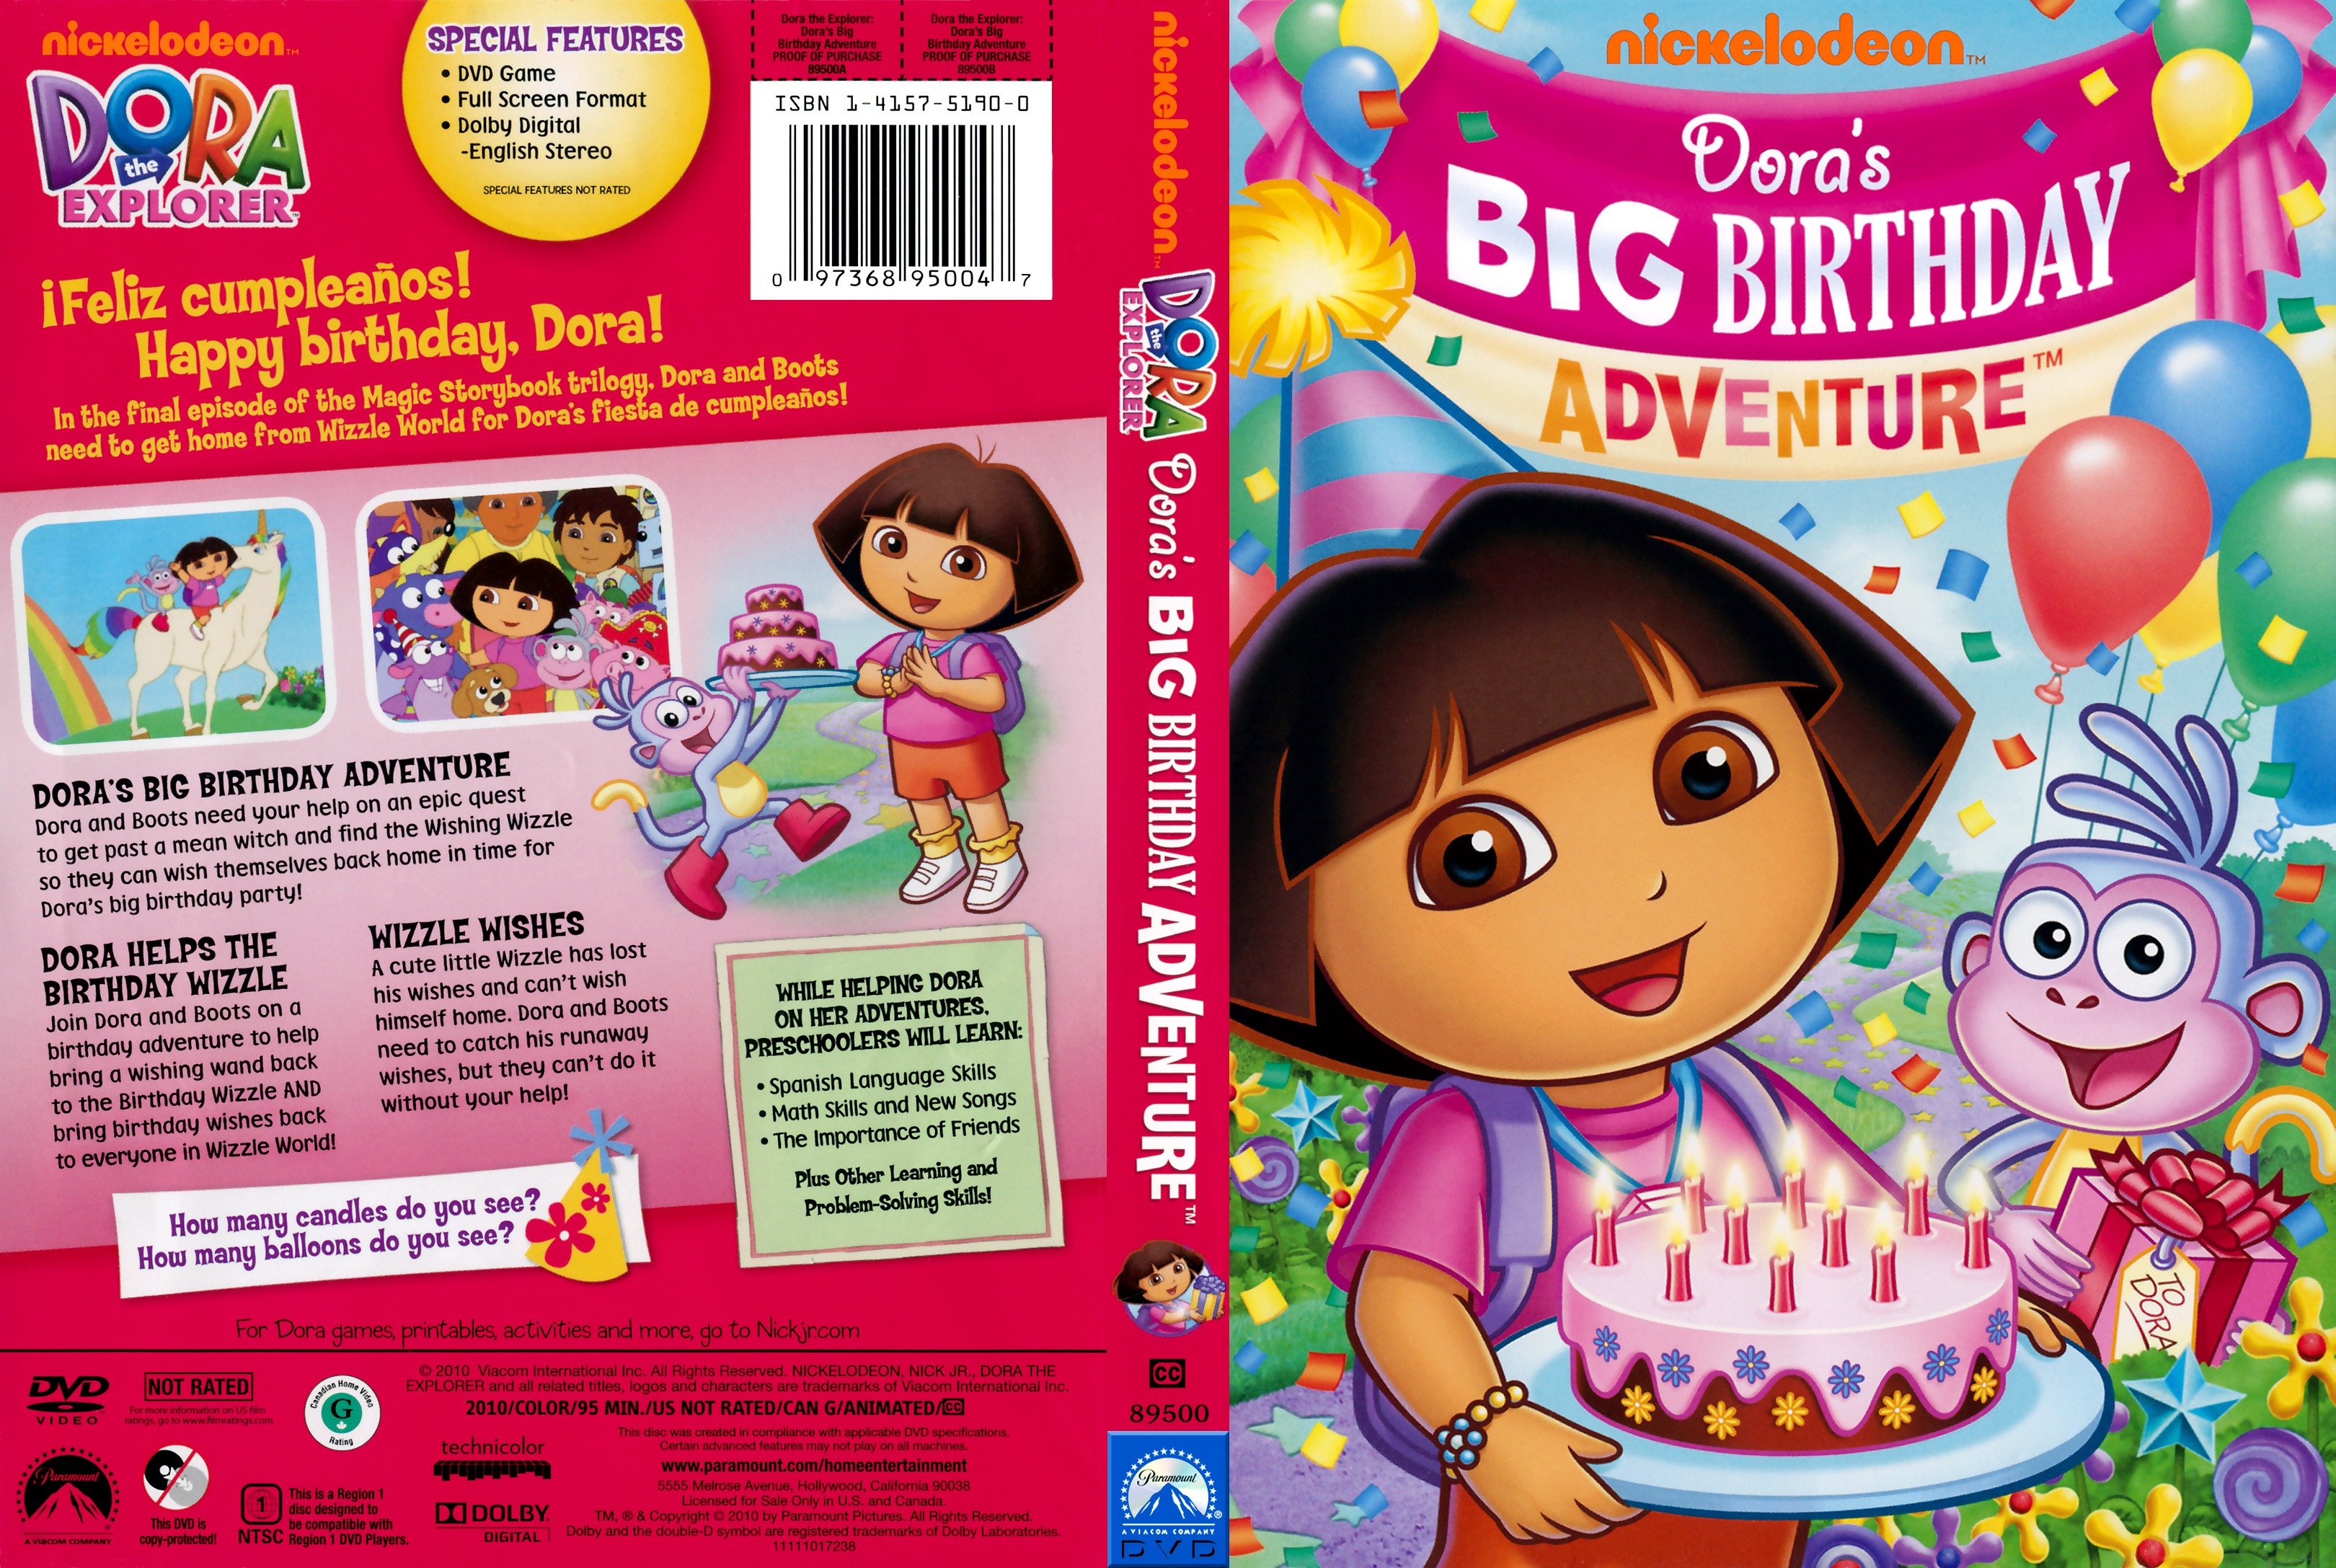 Doras Big Birthday Adventure.